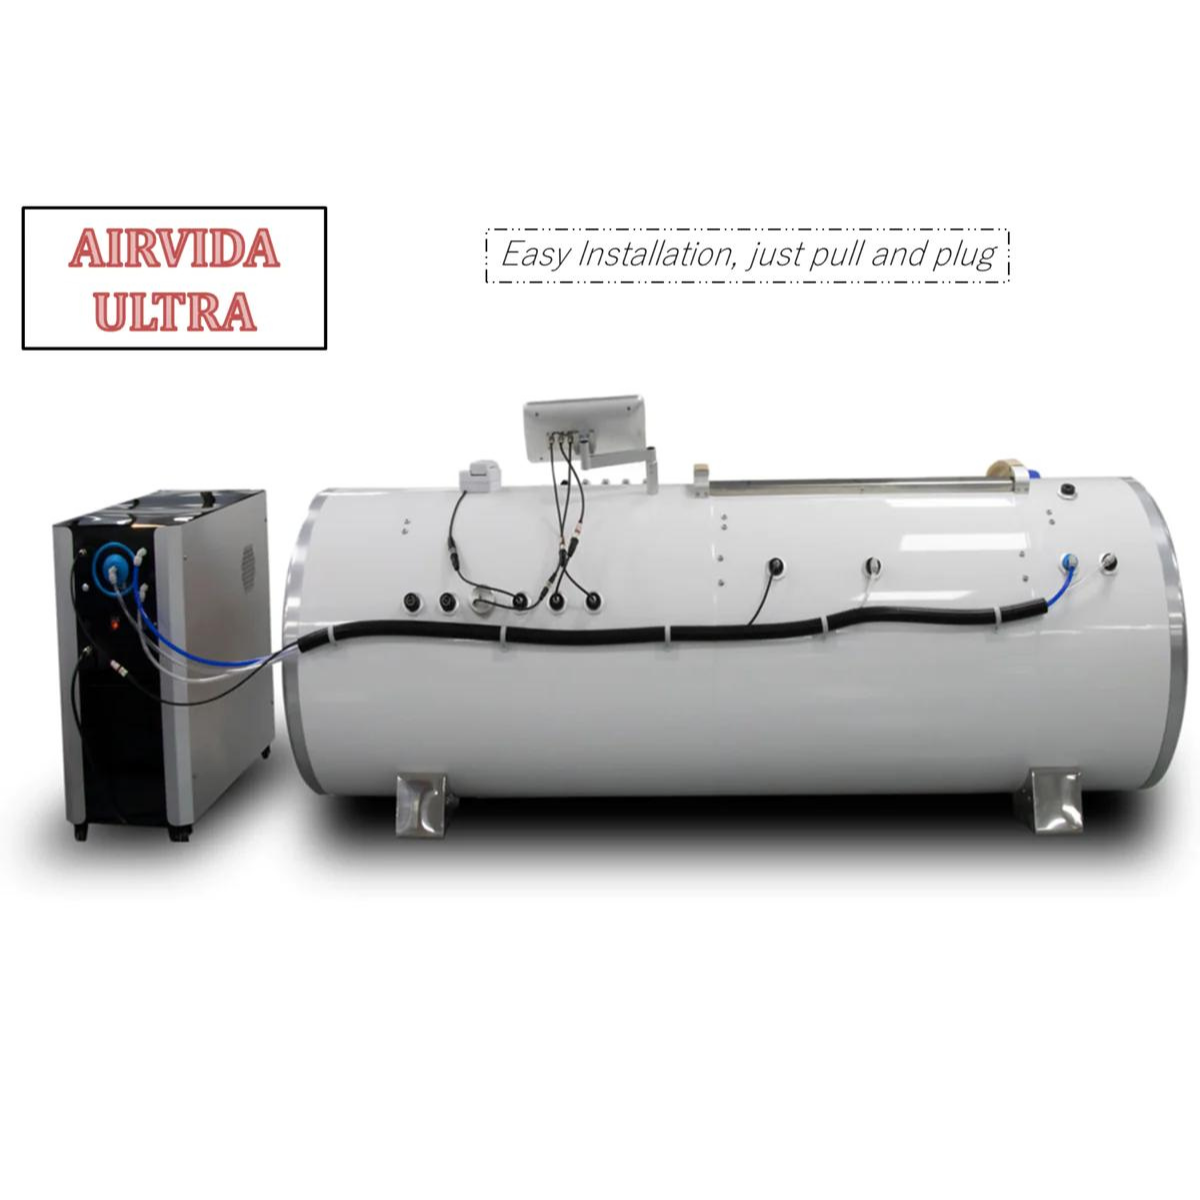 Airvida Ultra 1.5-2.0 ATA Hard Shell Lying Hyperbaric Chambers